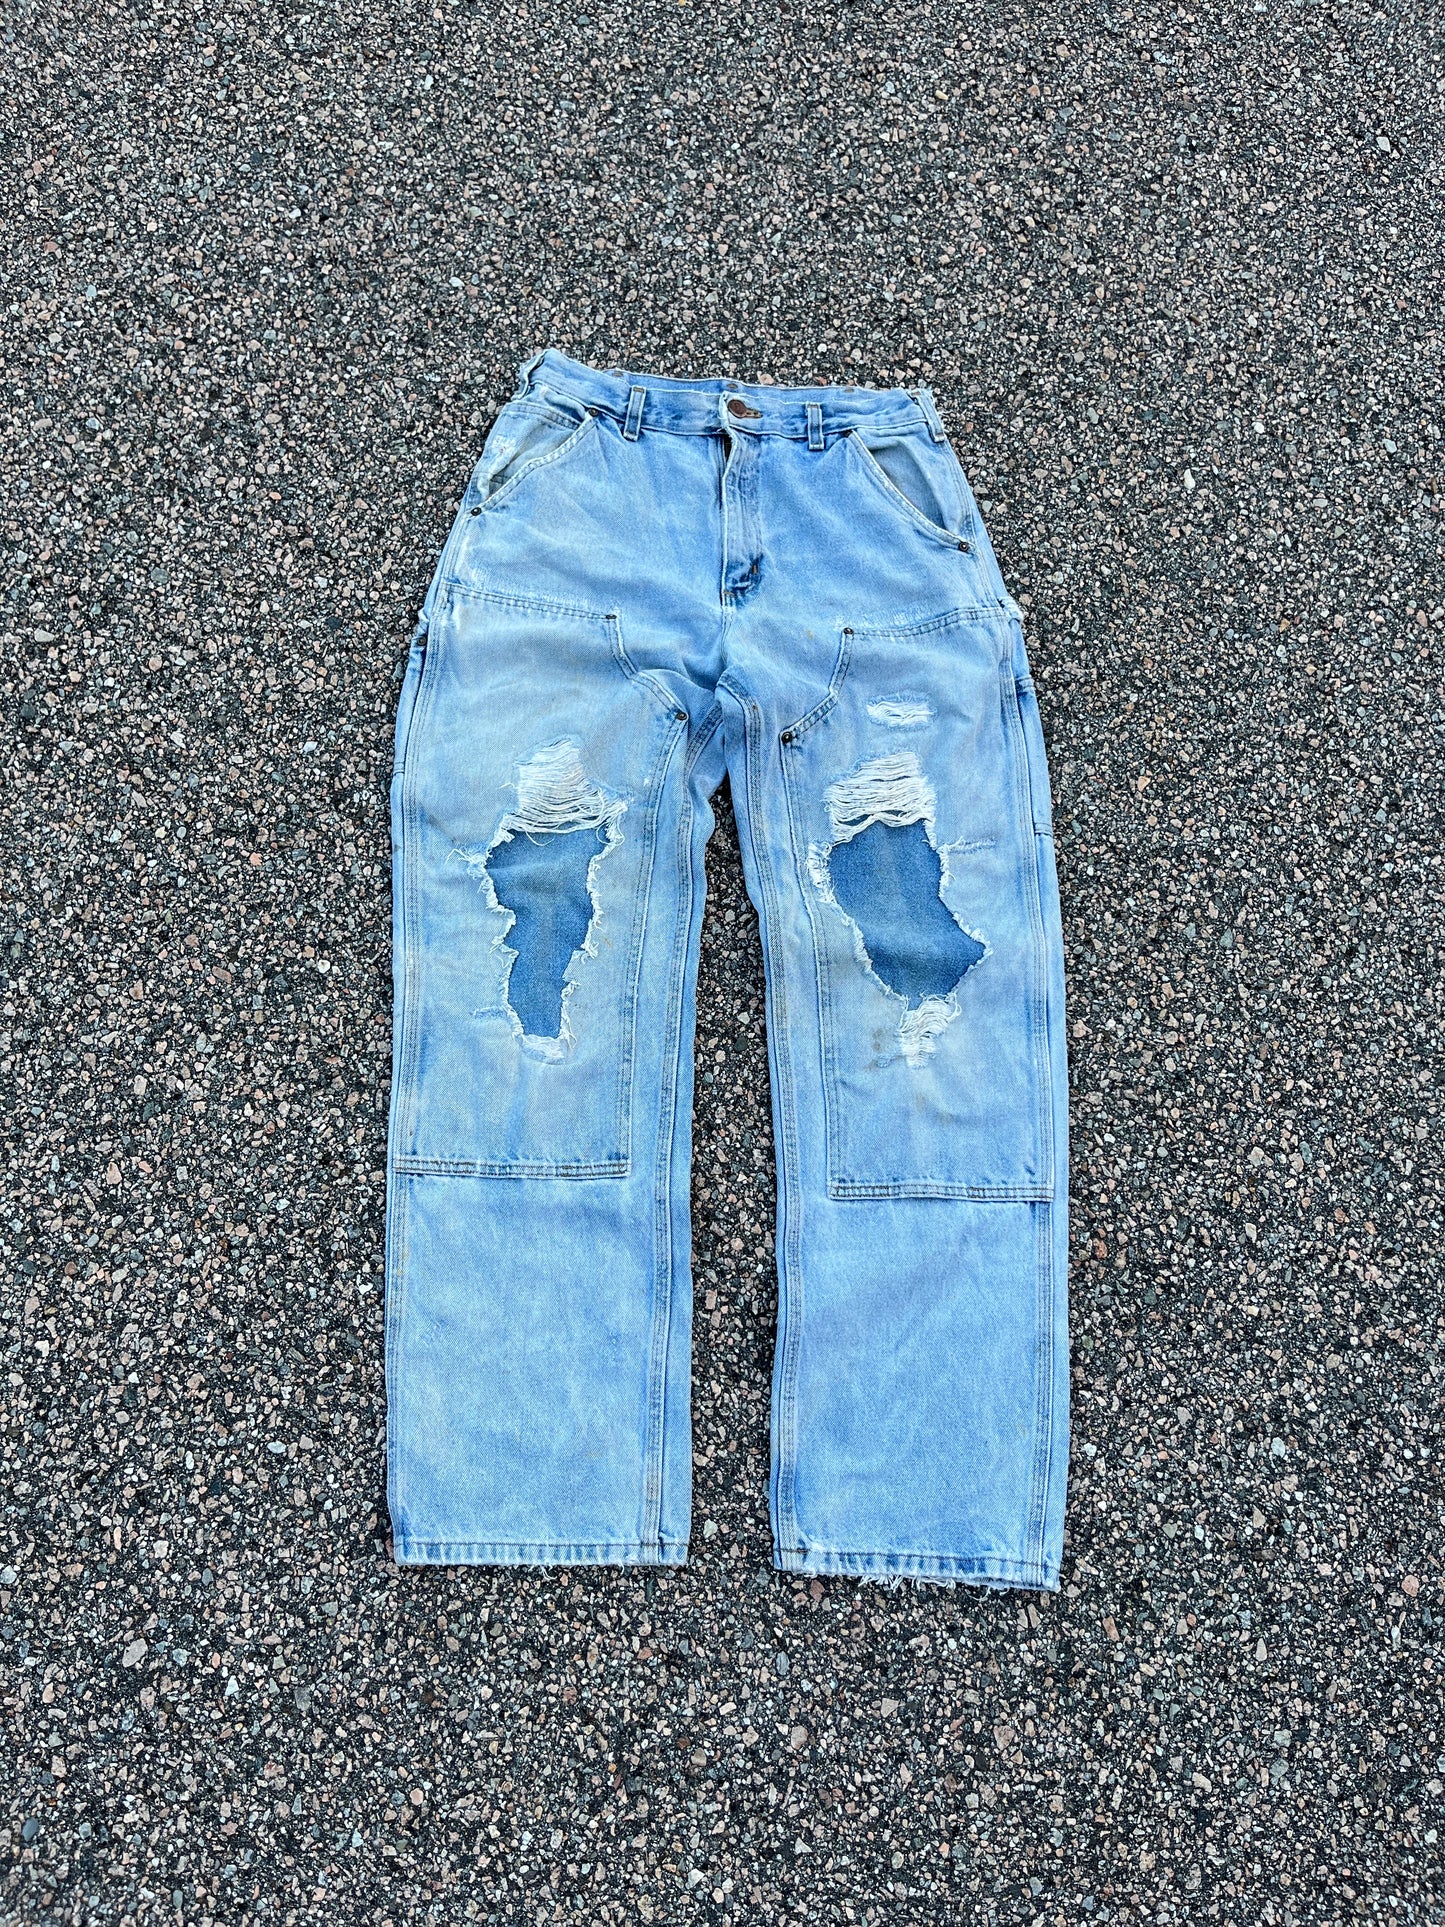 Faded n Distressed Denim Carhartt Double Knee Pants - 32 x 32